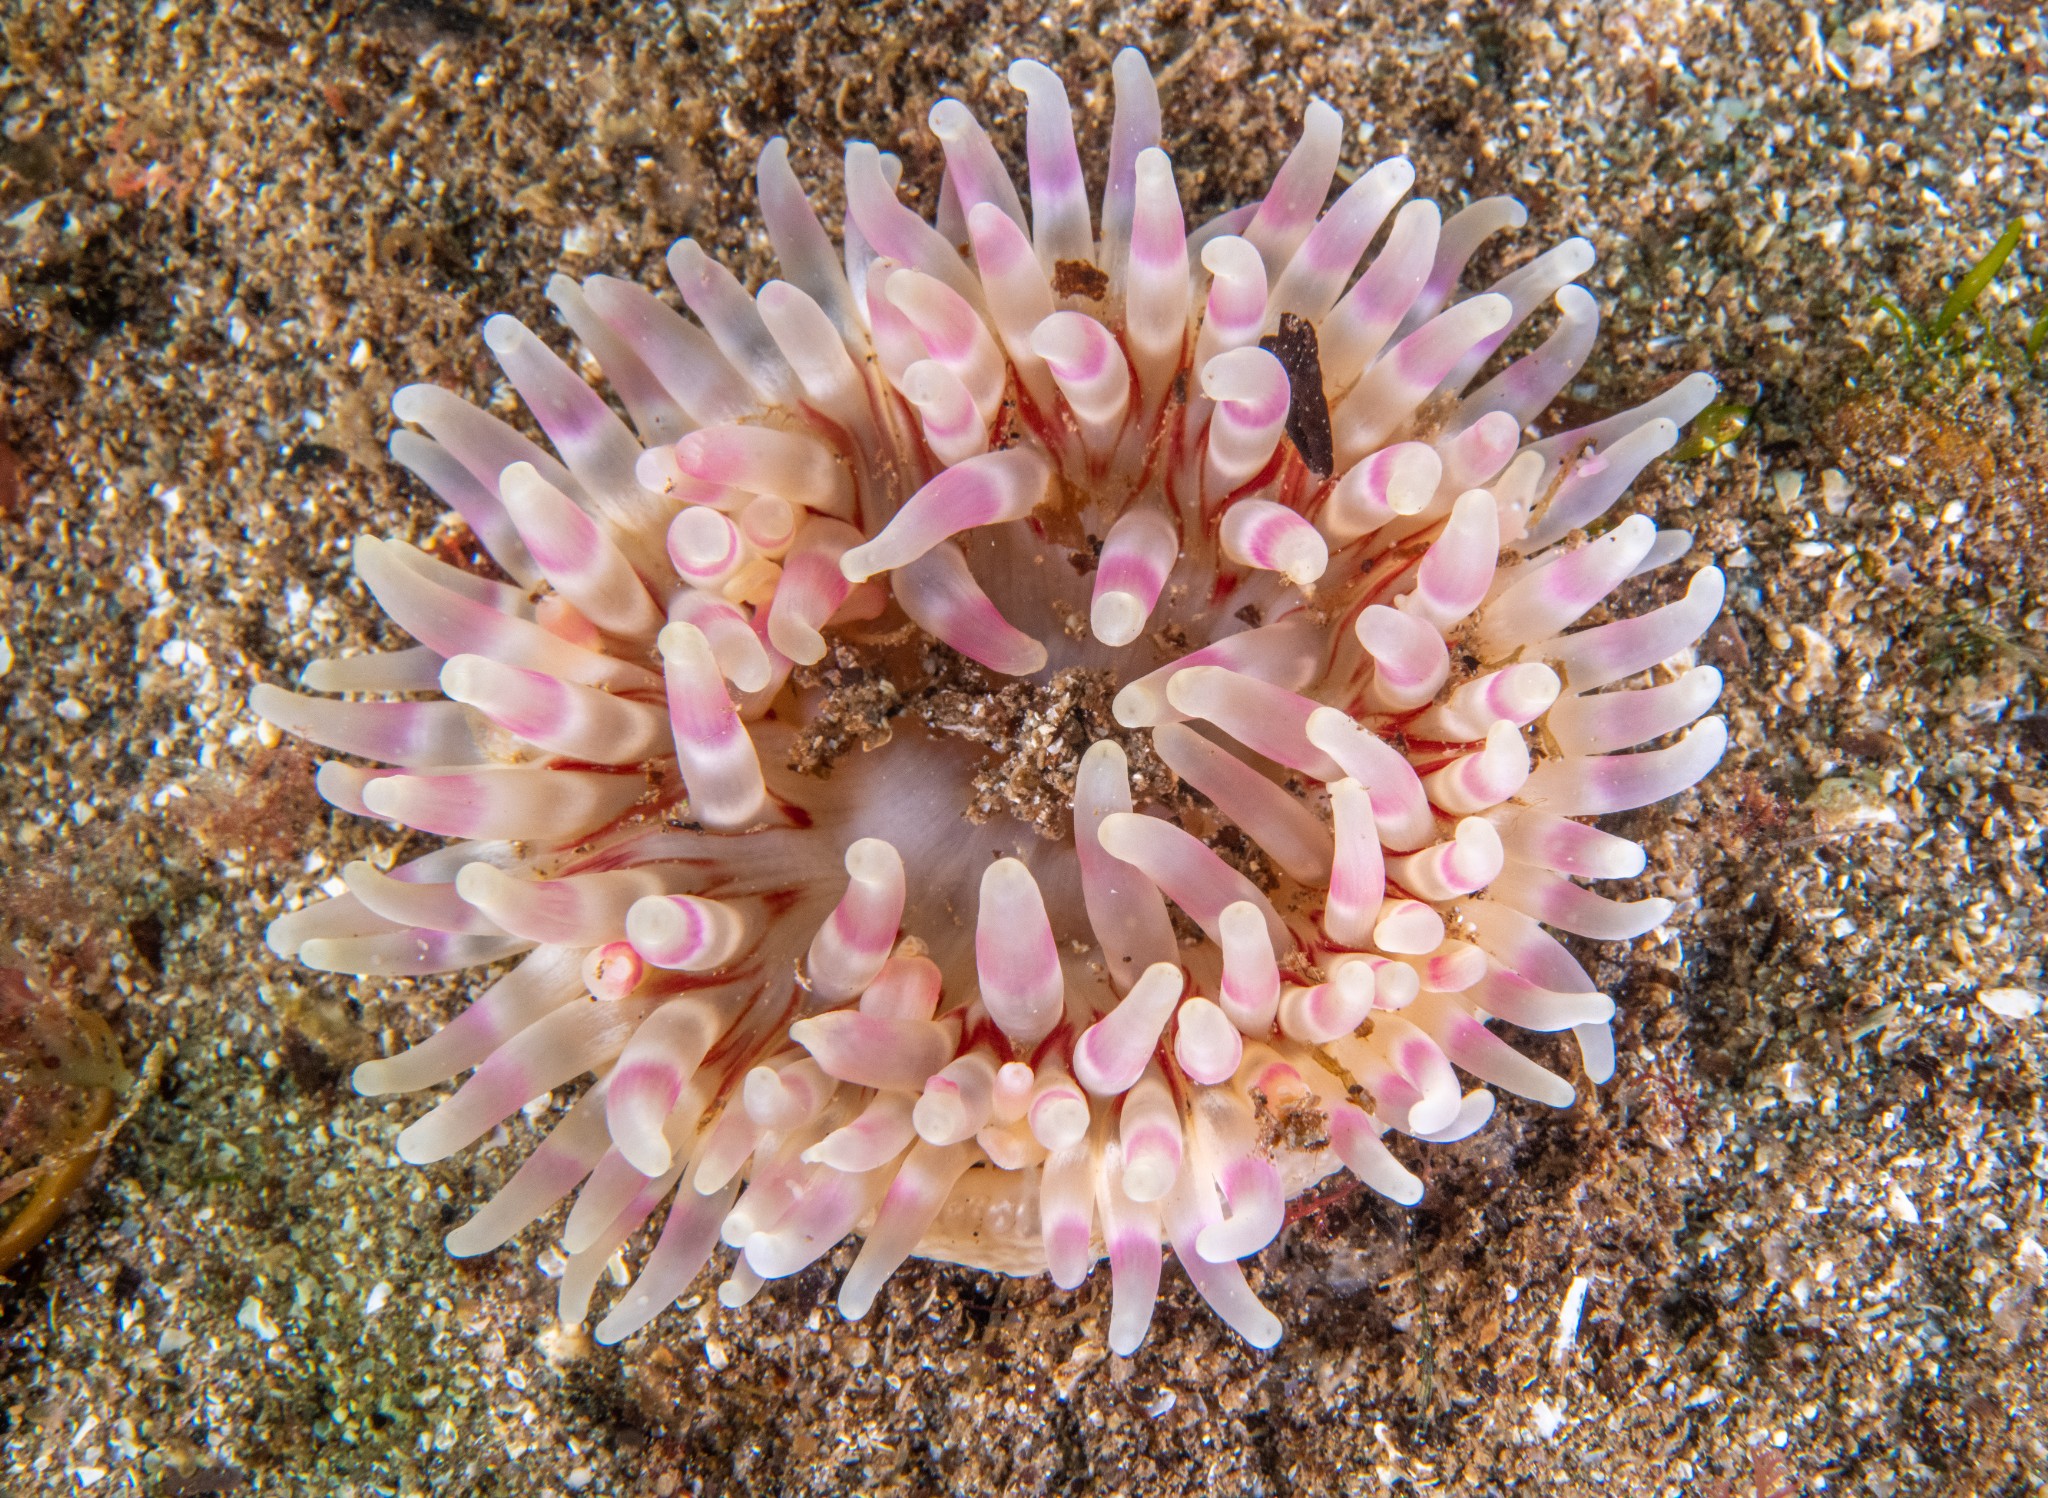 Dahlia anemone - image by Raymond Besant